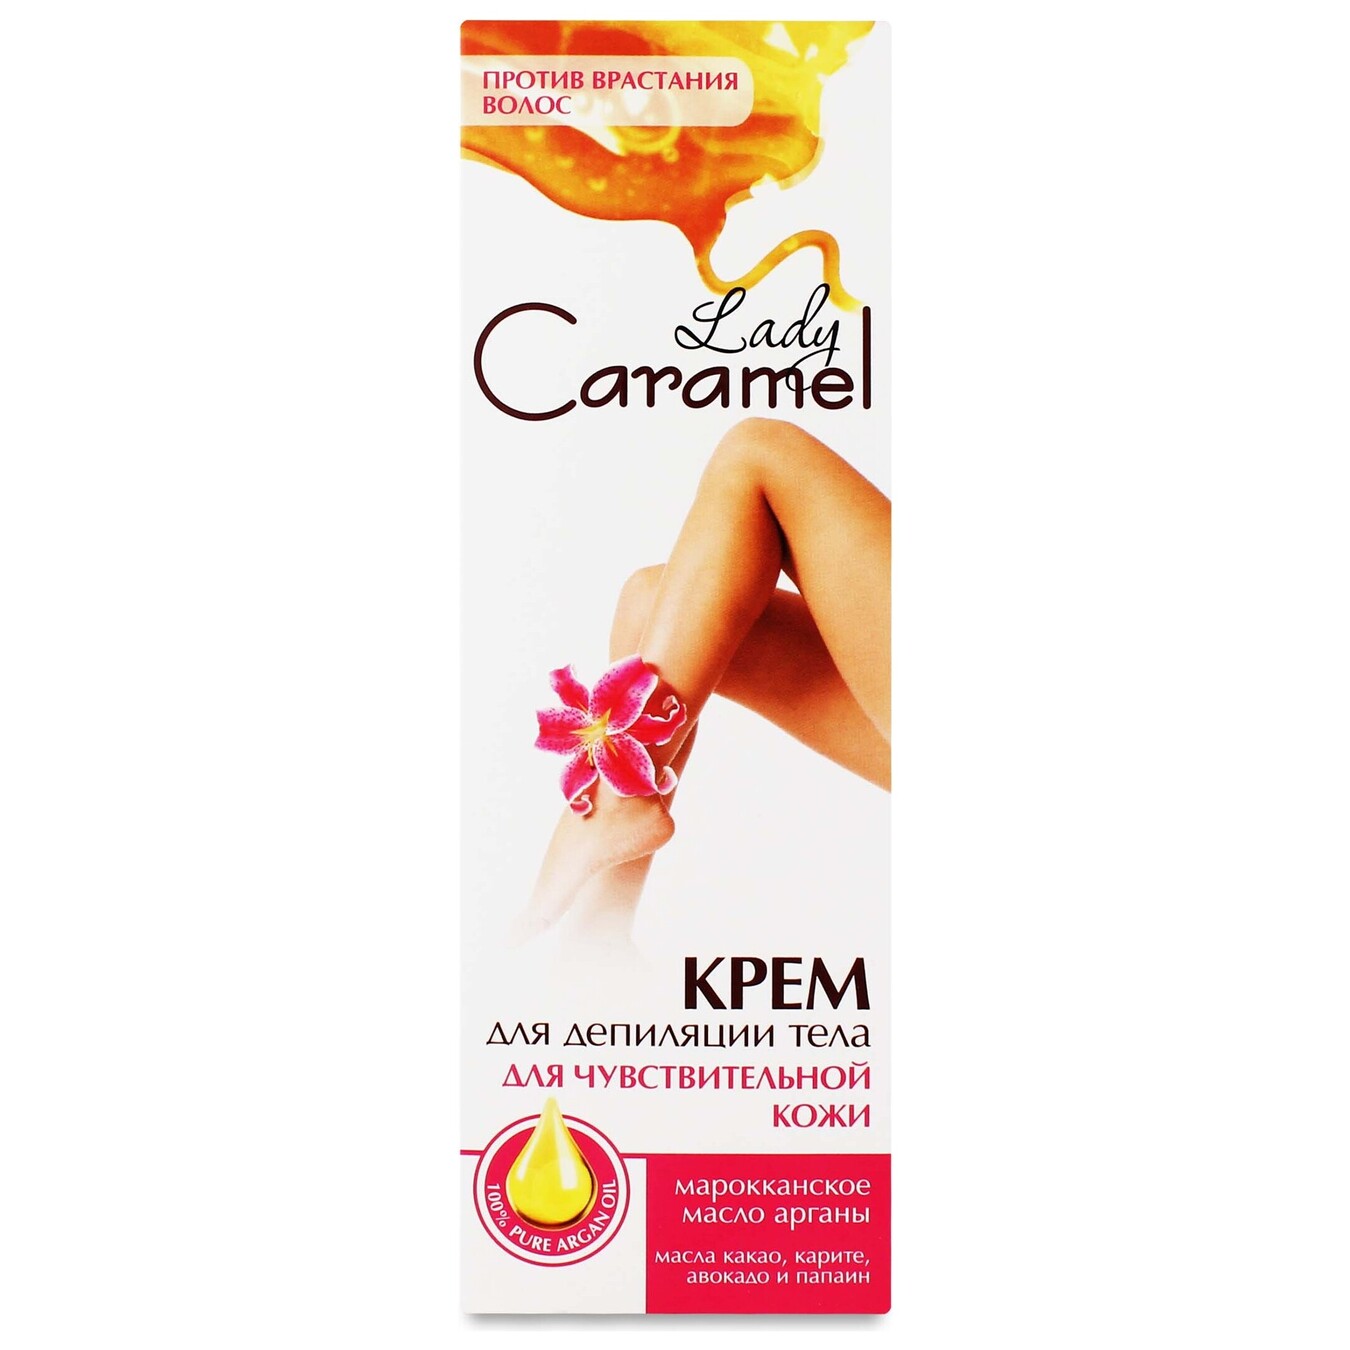 Caramel depilation cream for sensitive skin 100ml